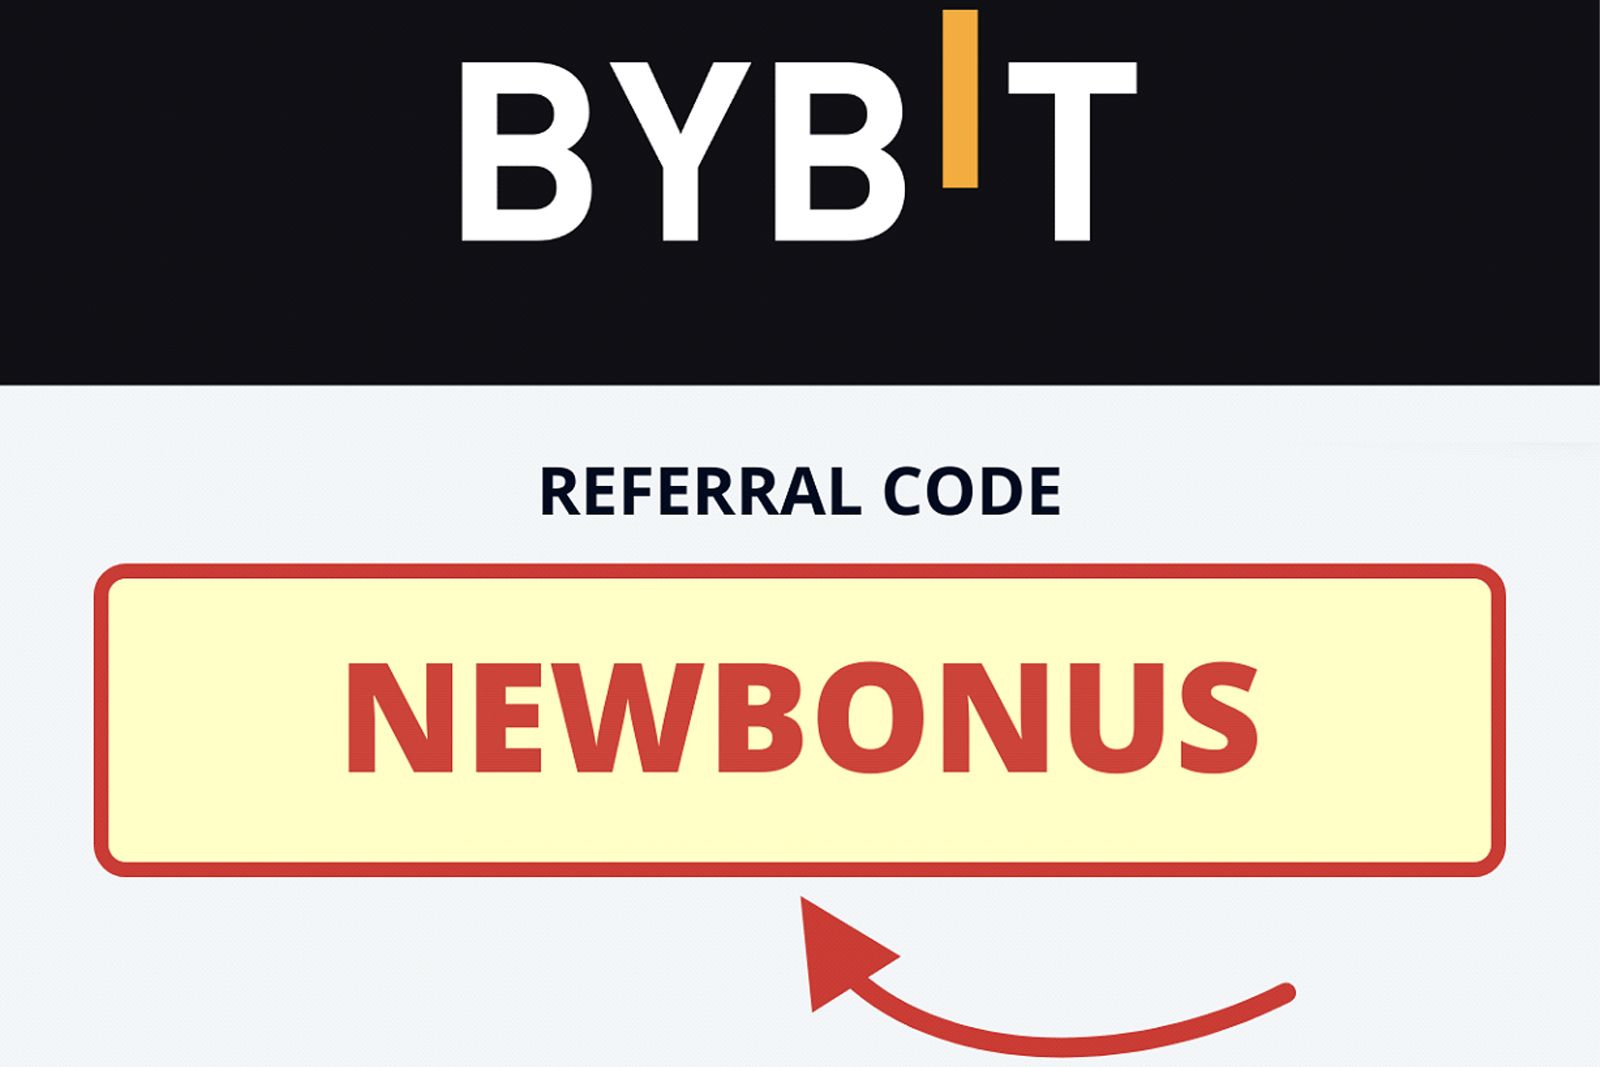 Bybit referral code: NEWBONUS (get sign up bonus) photo 1